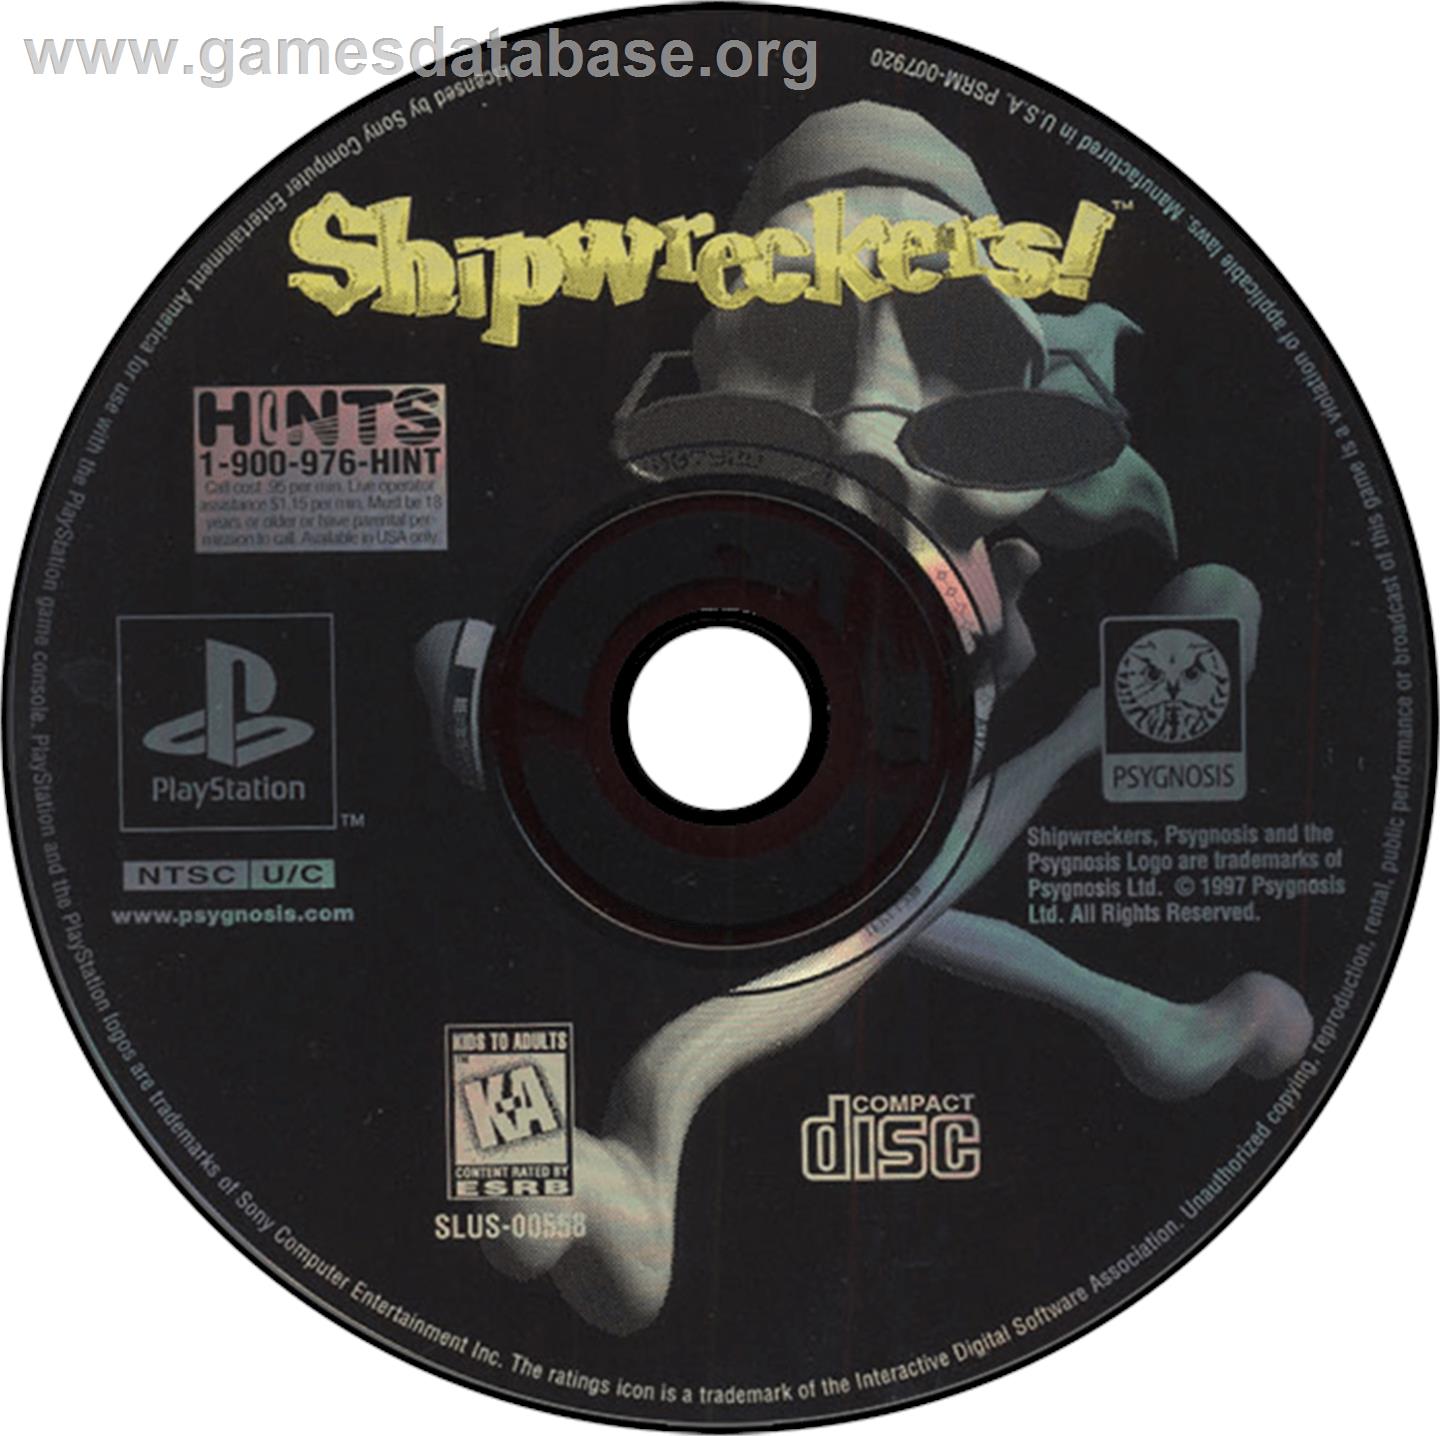 Shipwreckers! - Sony Playstation - Artwork - Disc